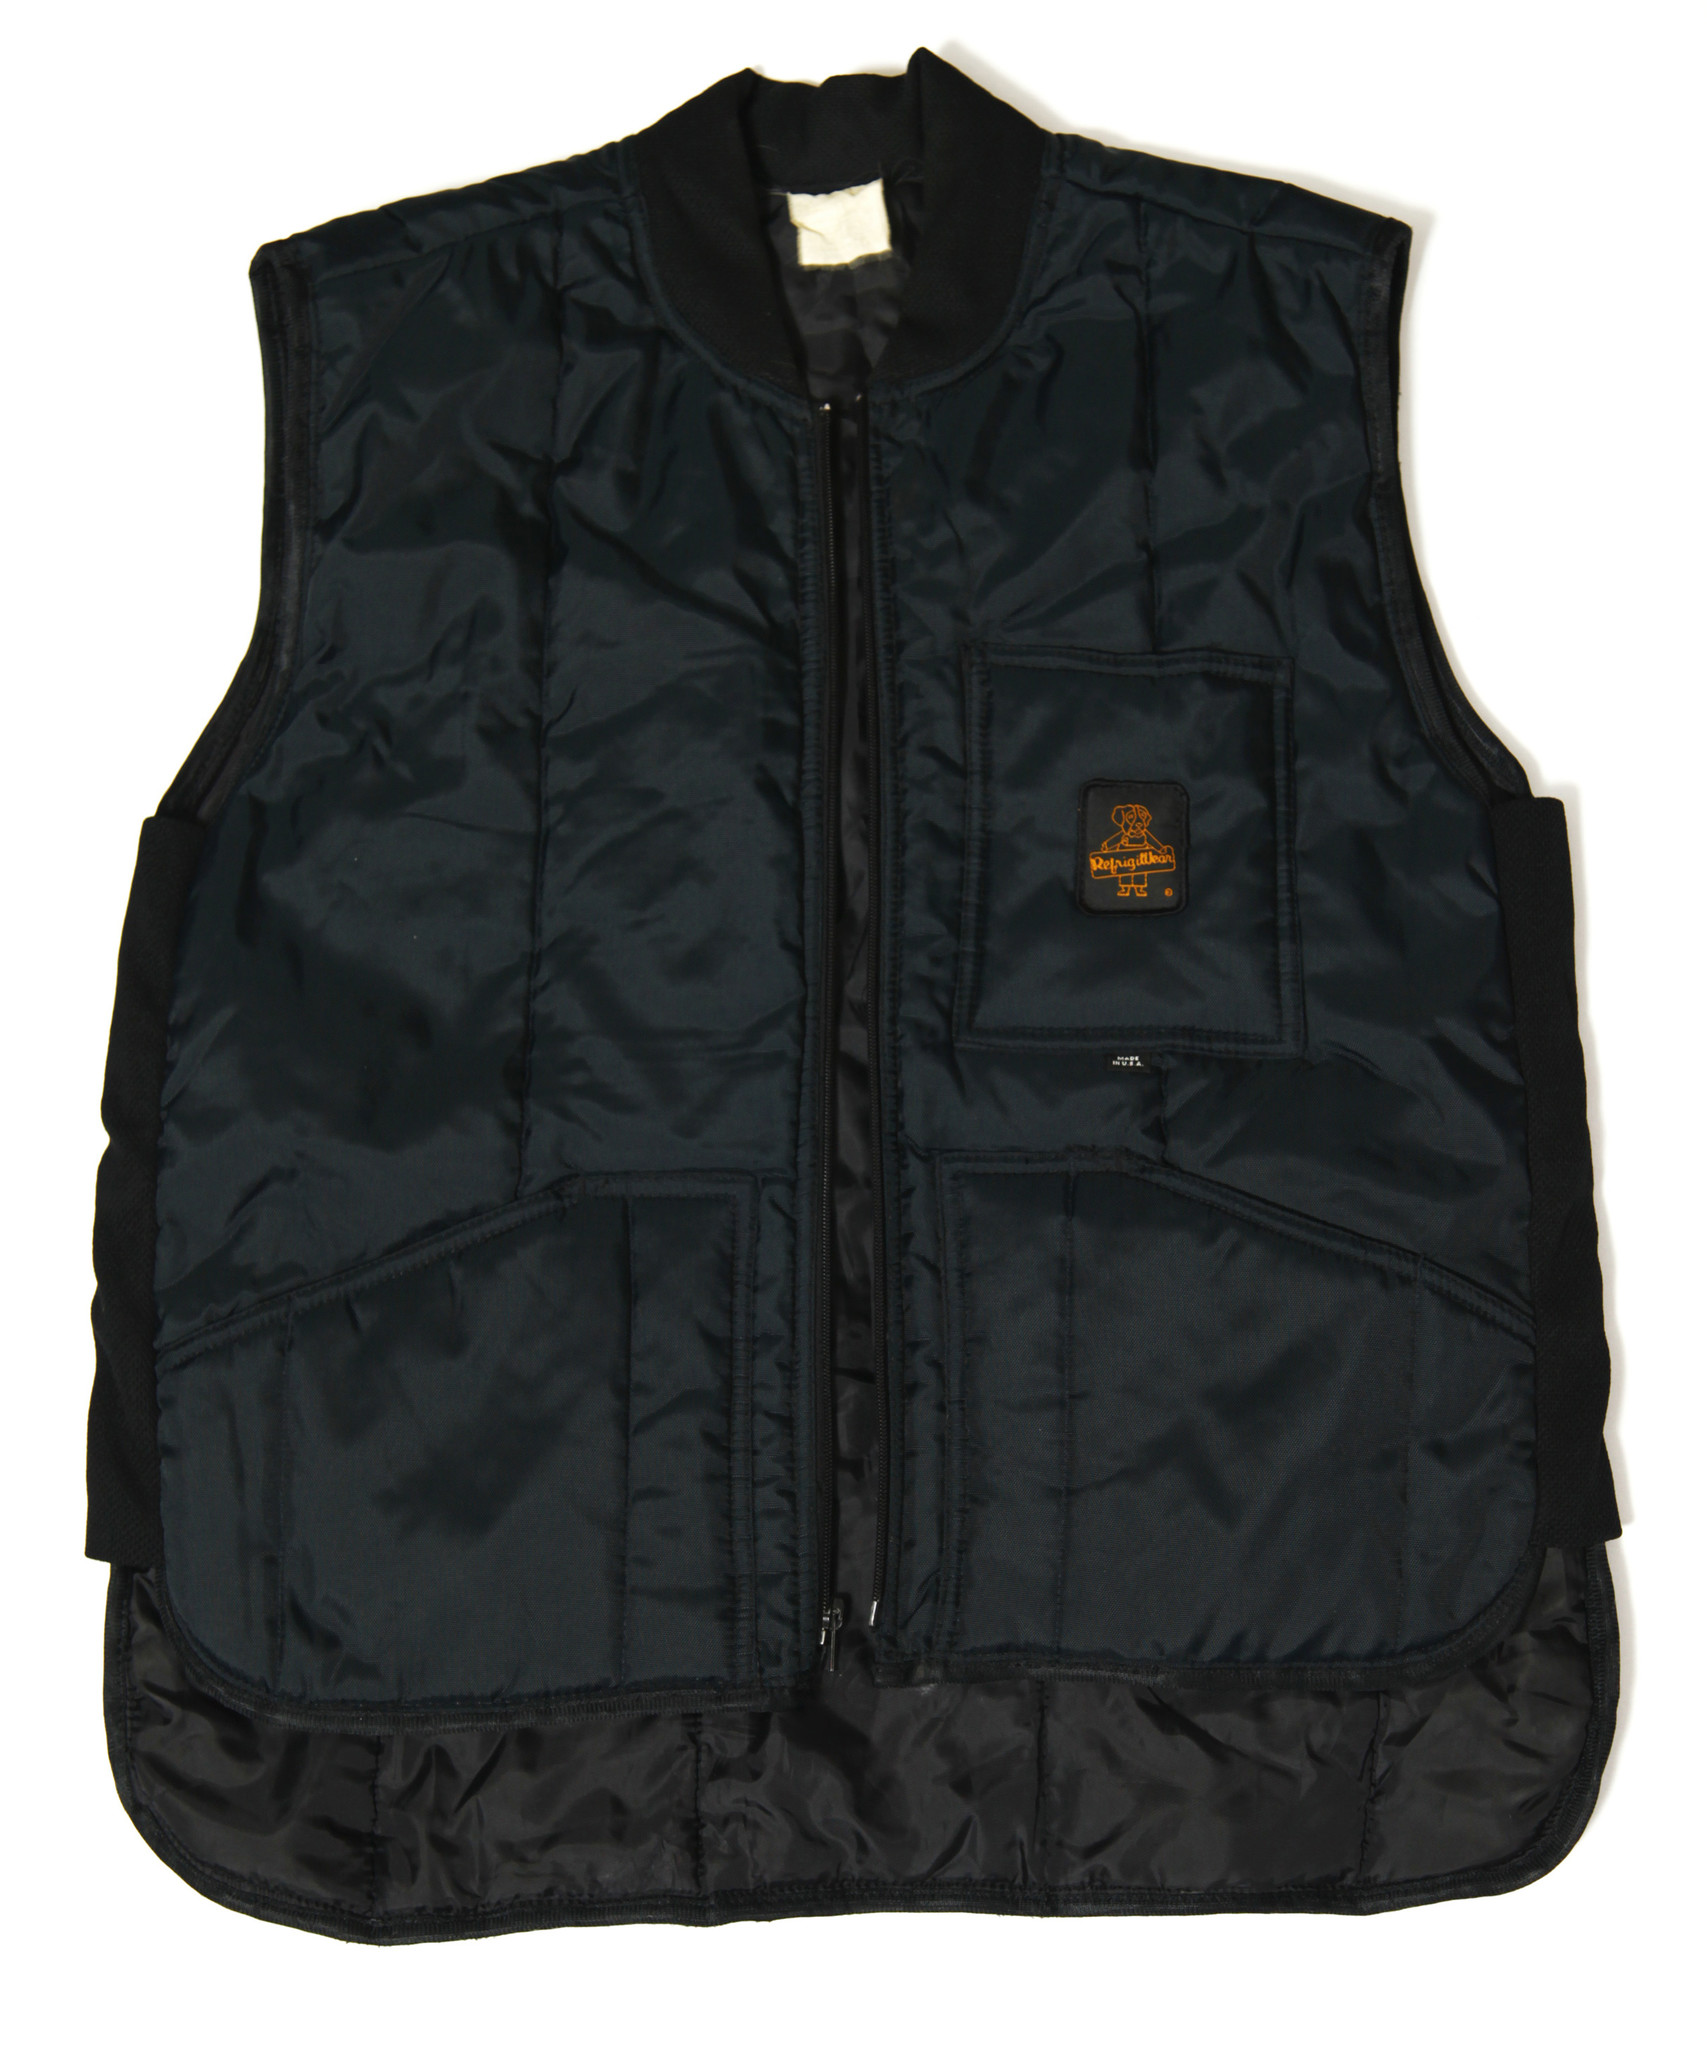 Black Refrigiwear vest